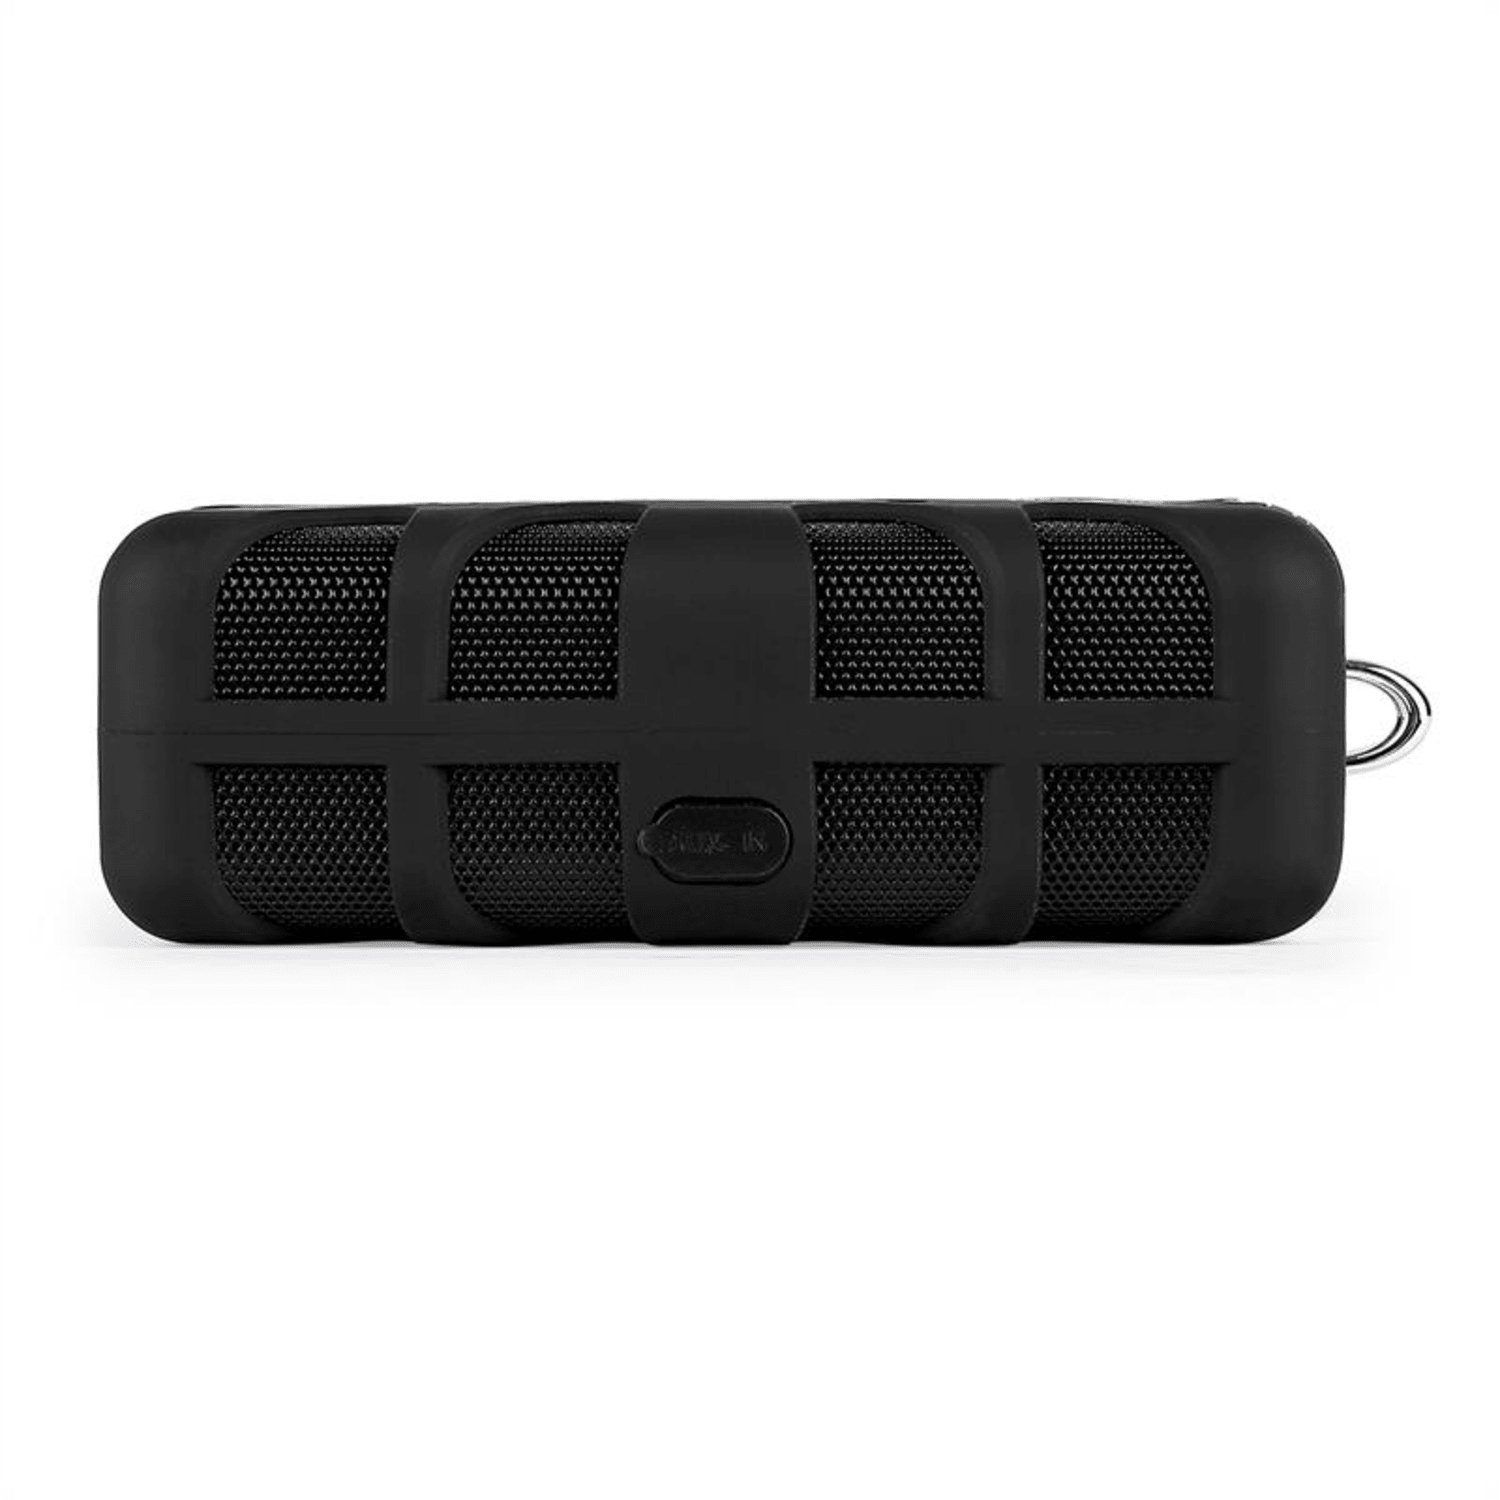 ONECONCEPT Black W) Know Portable-Lautsprecher (50